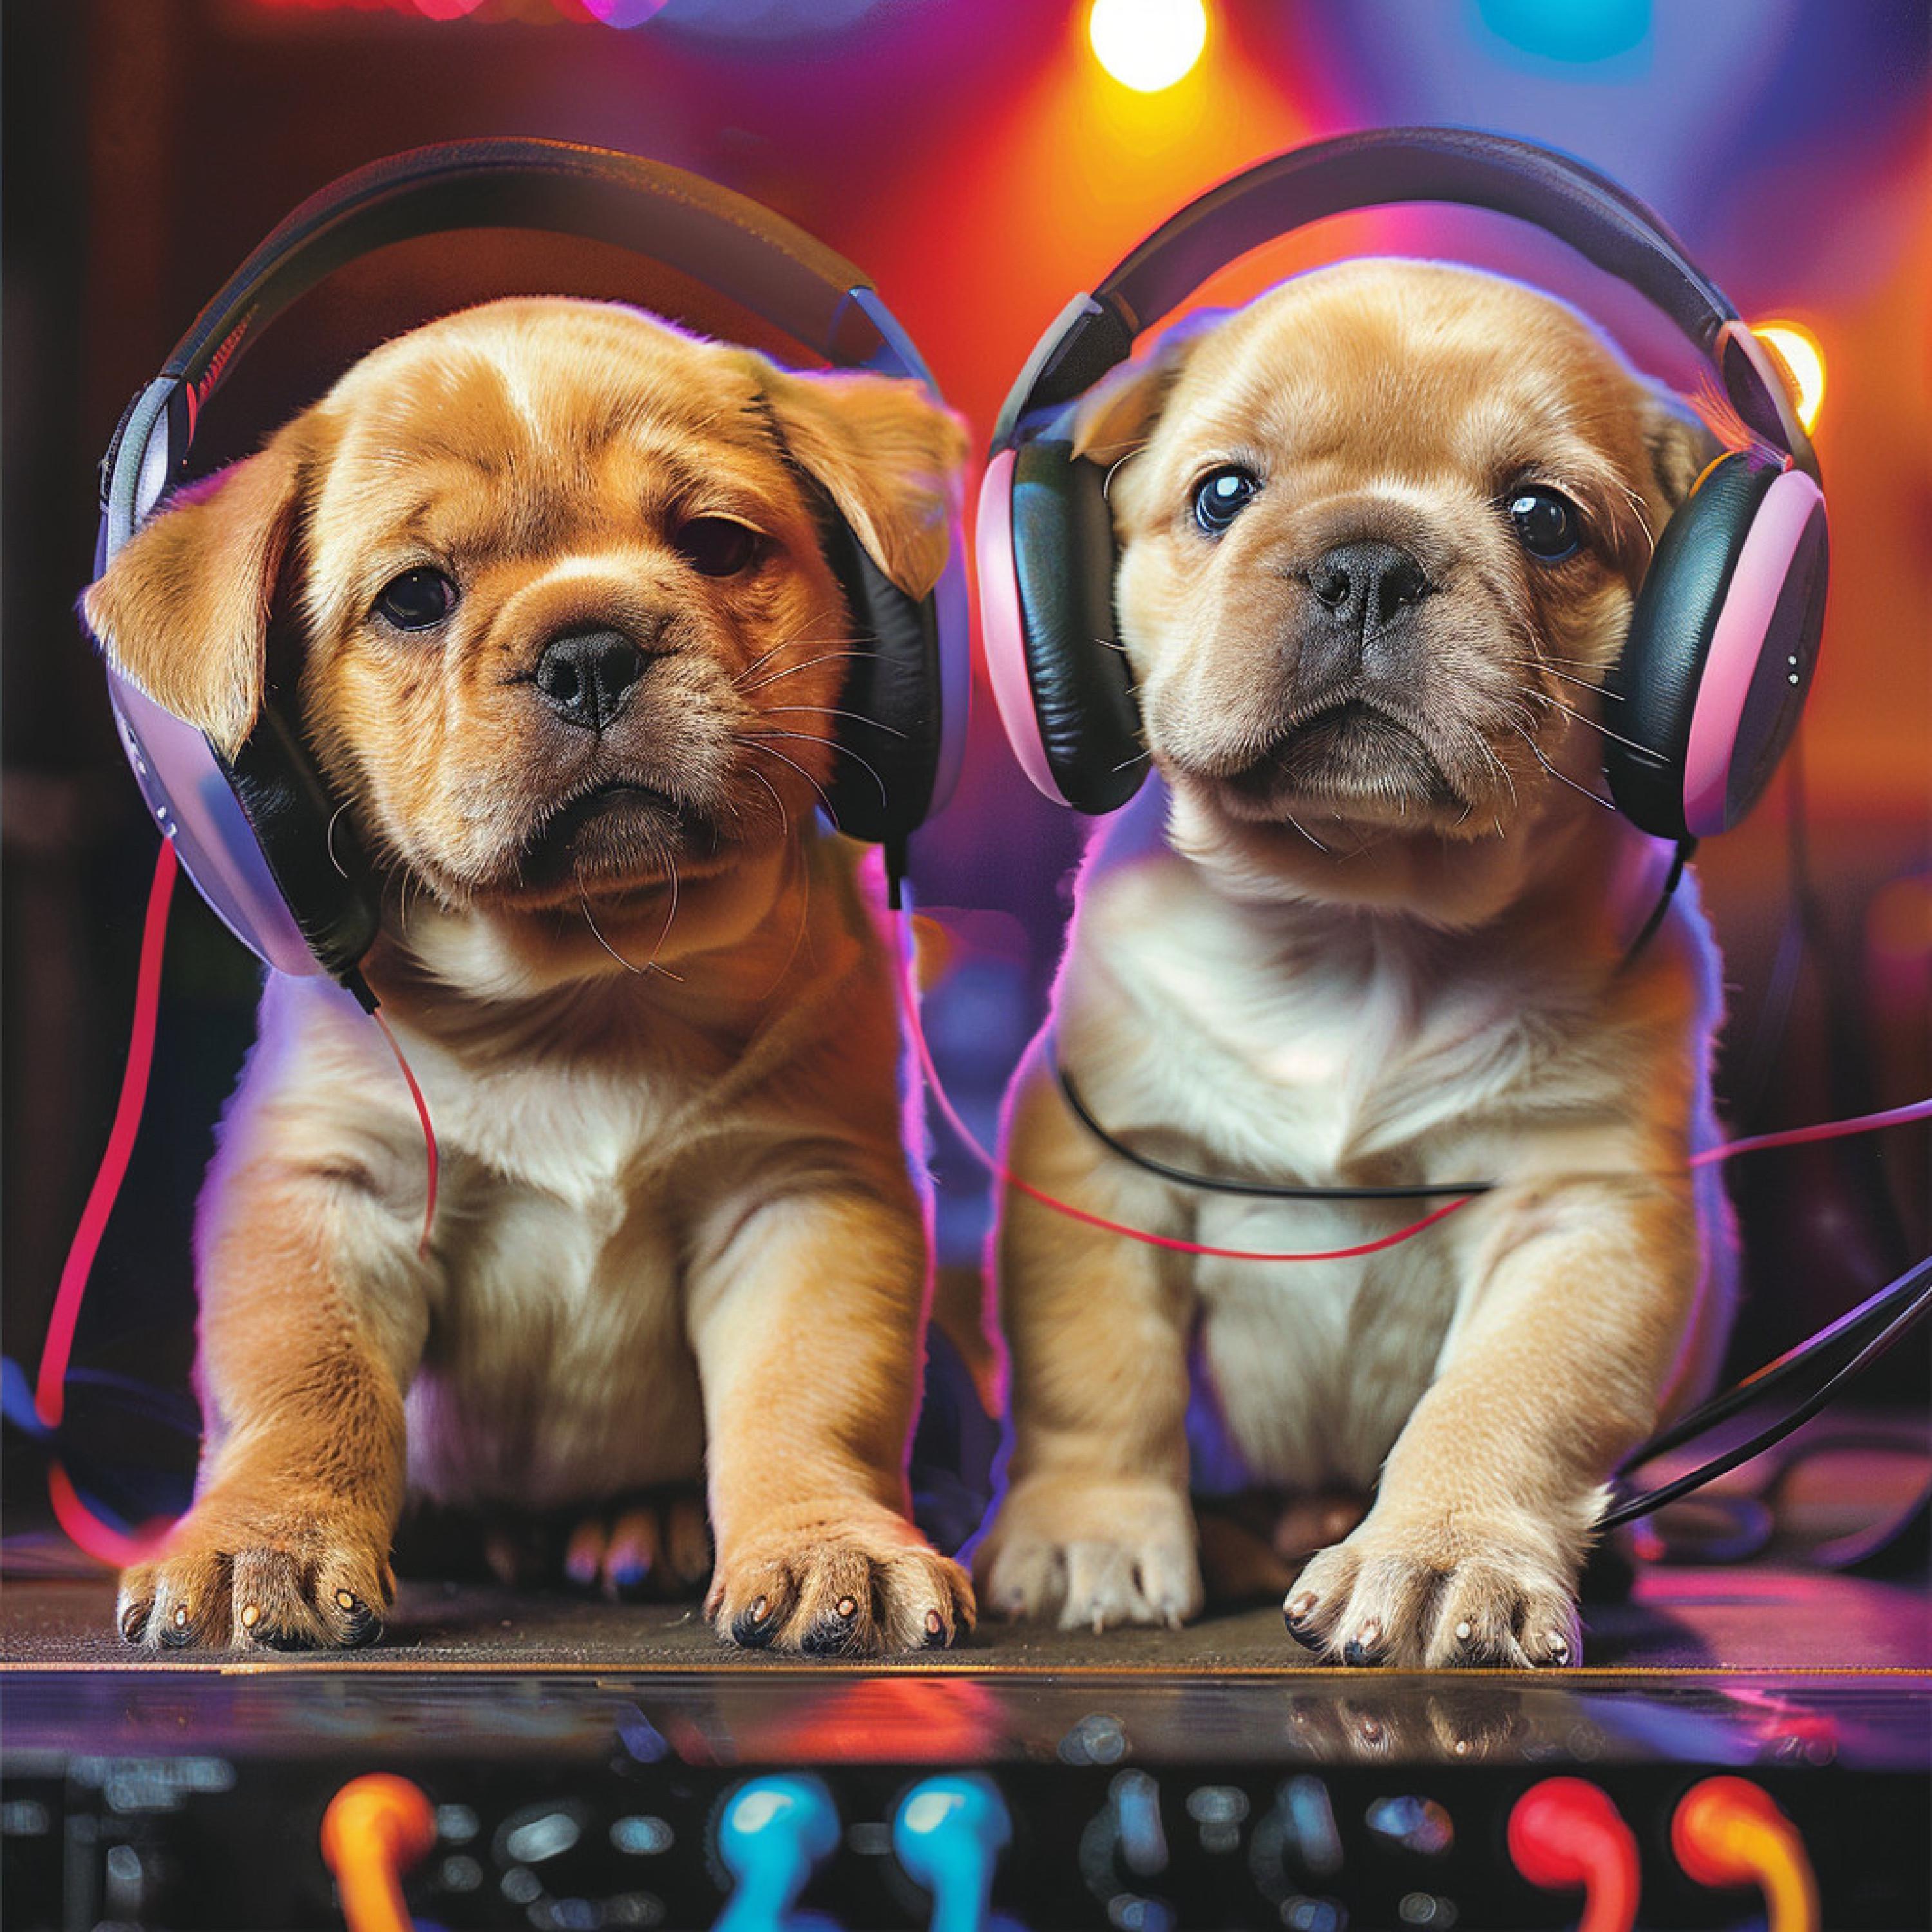 Music for Dog's Ear - Motivate Dogs Music